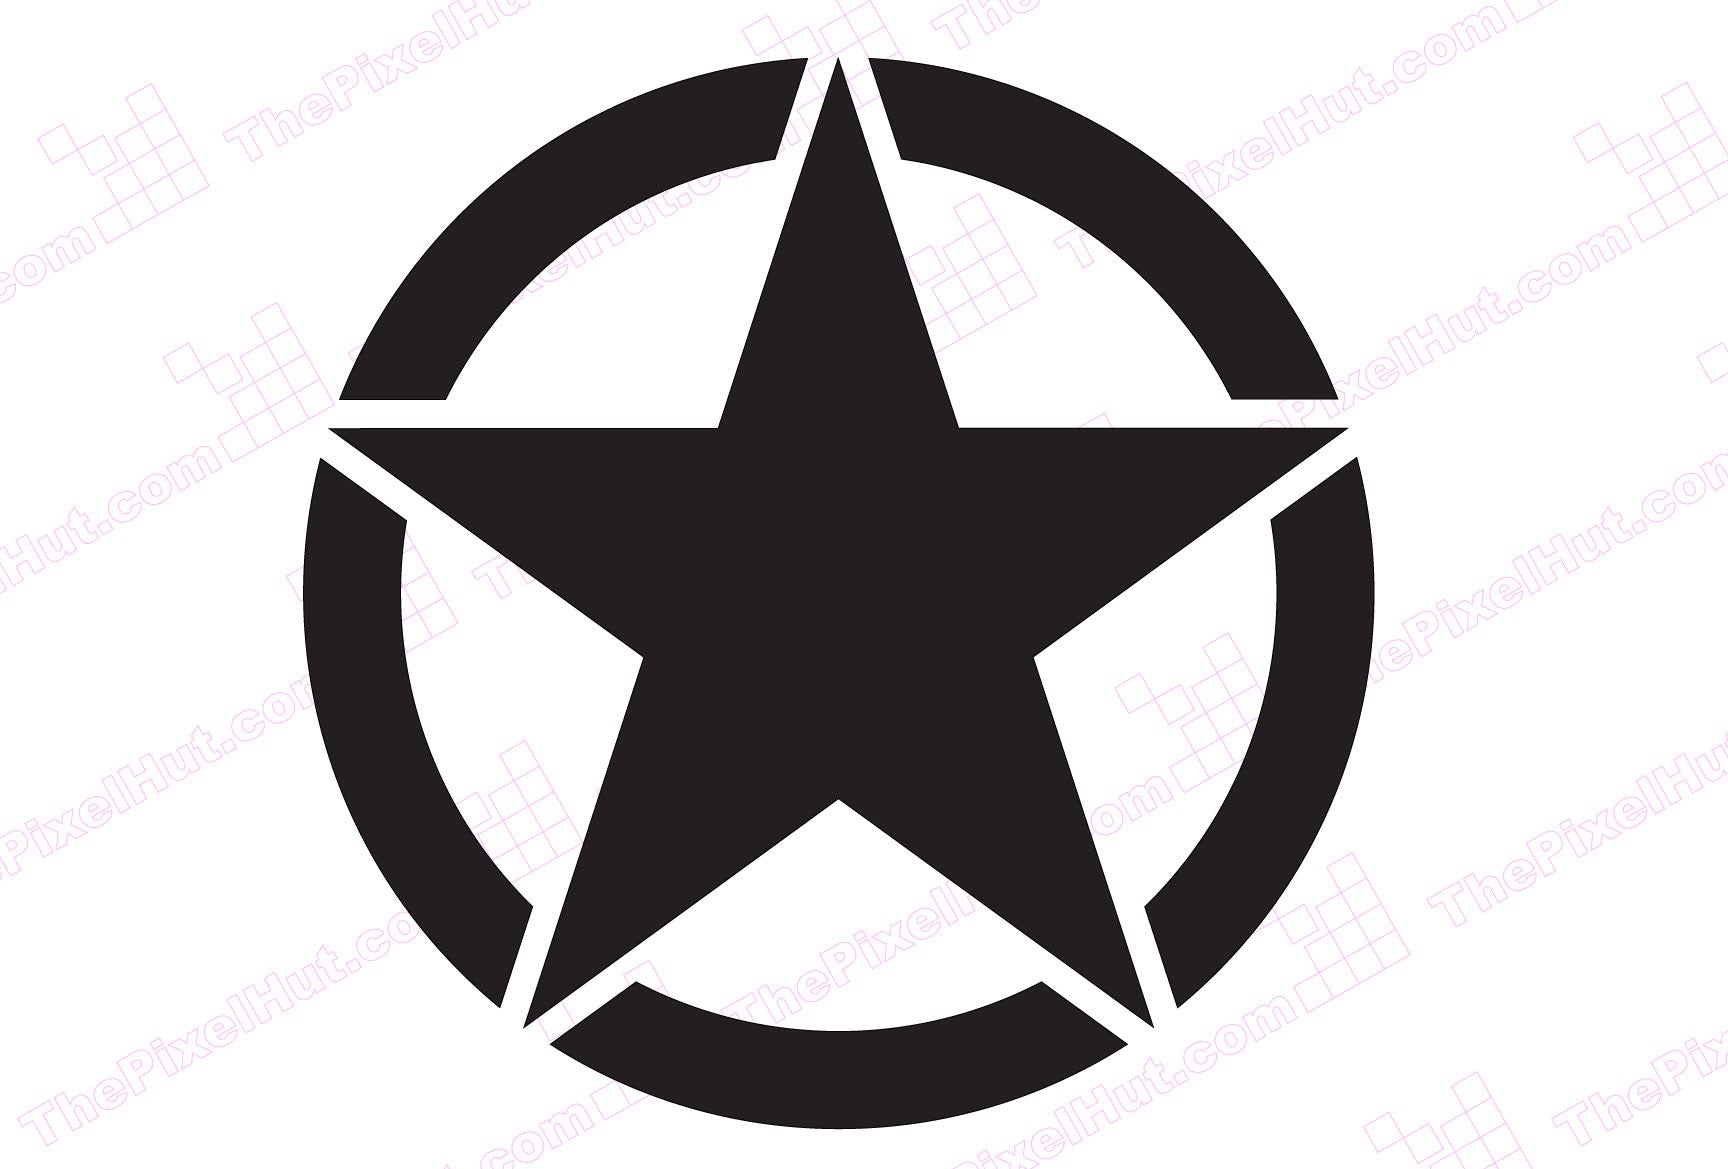 Oscar Mike Freedom Star Hood Graphic Sticker Decal